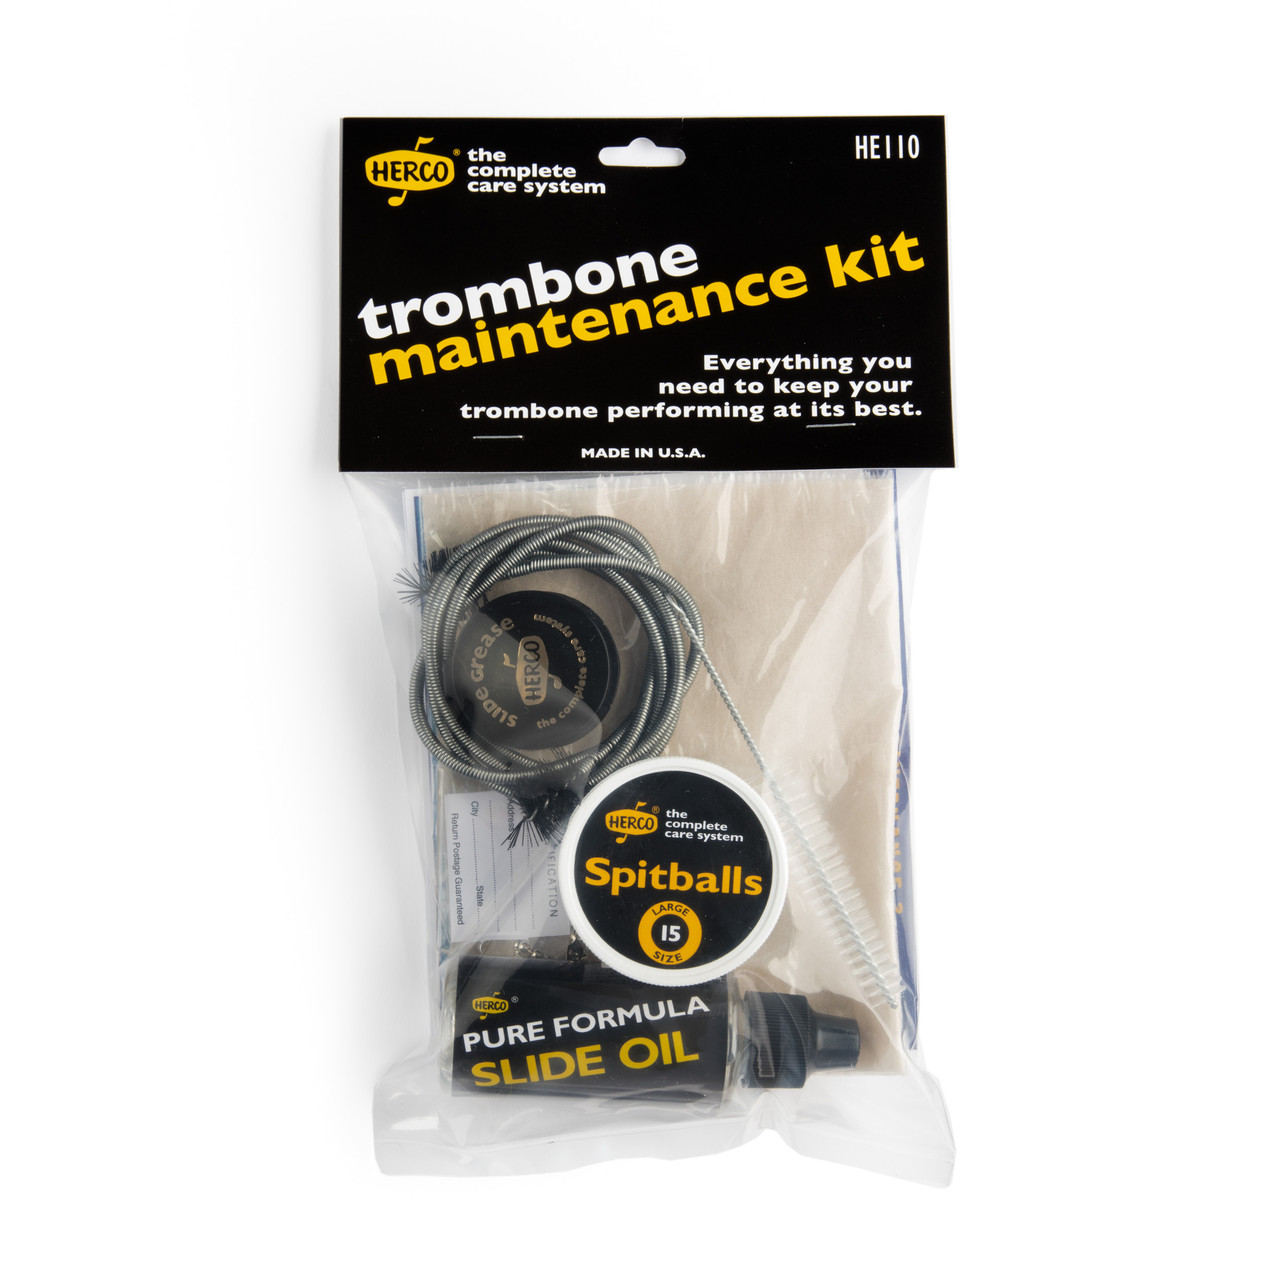 Herco Trombone Care Kit